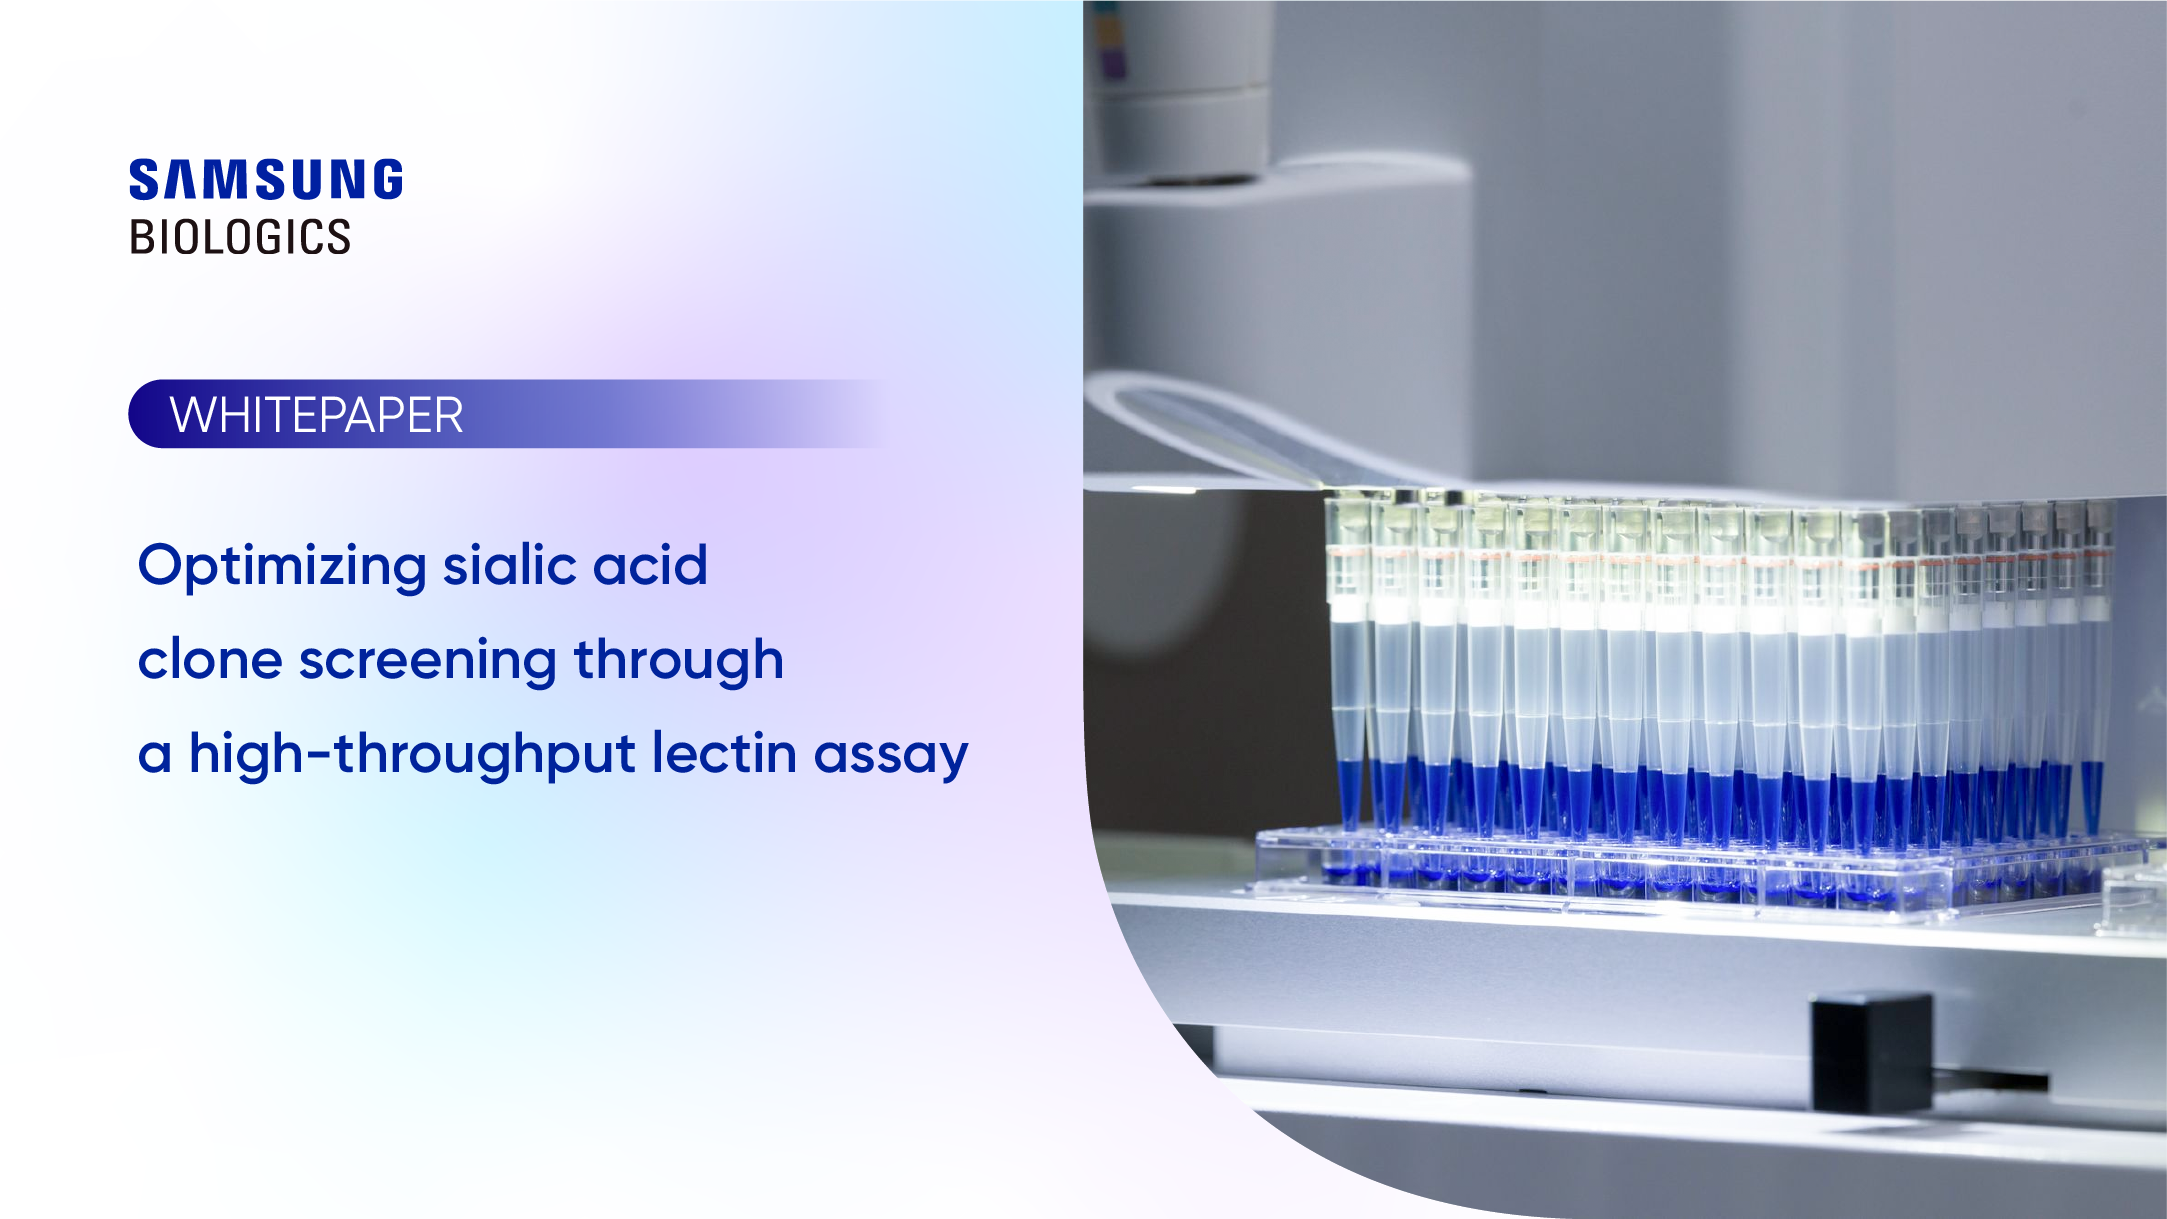 Whitepapers - Optimizing sialic acid clone screening through a high throughput lectin assay